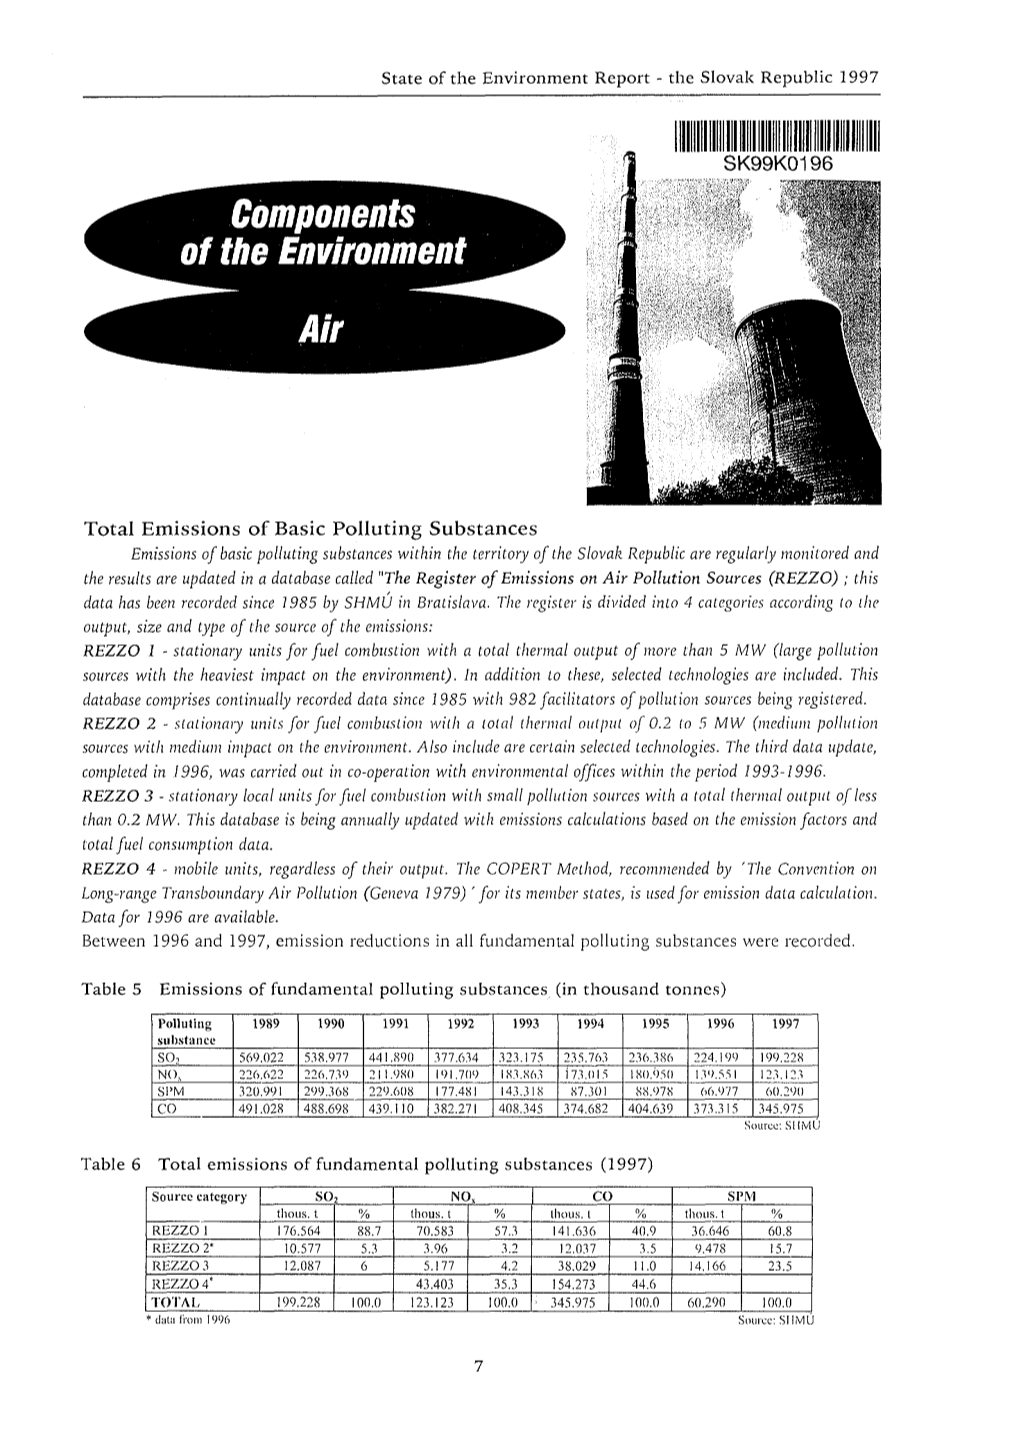 Total Emissions of Basic Polluting Substances